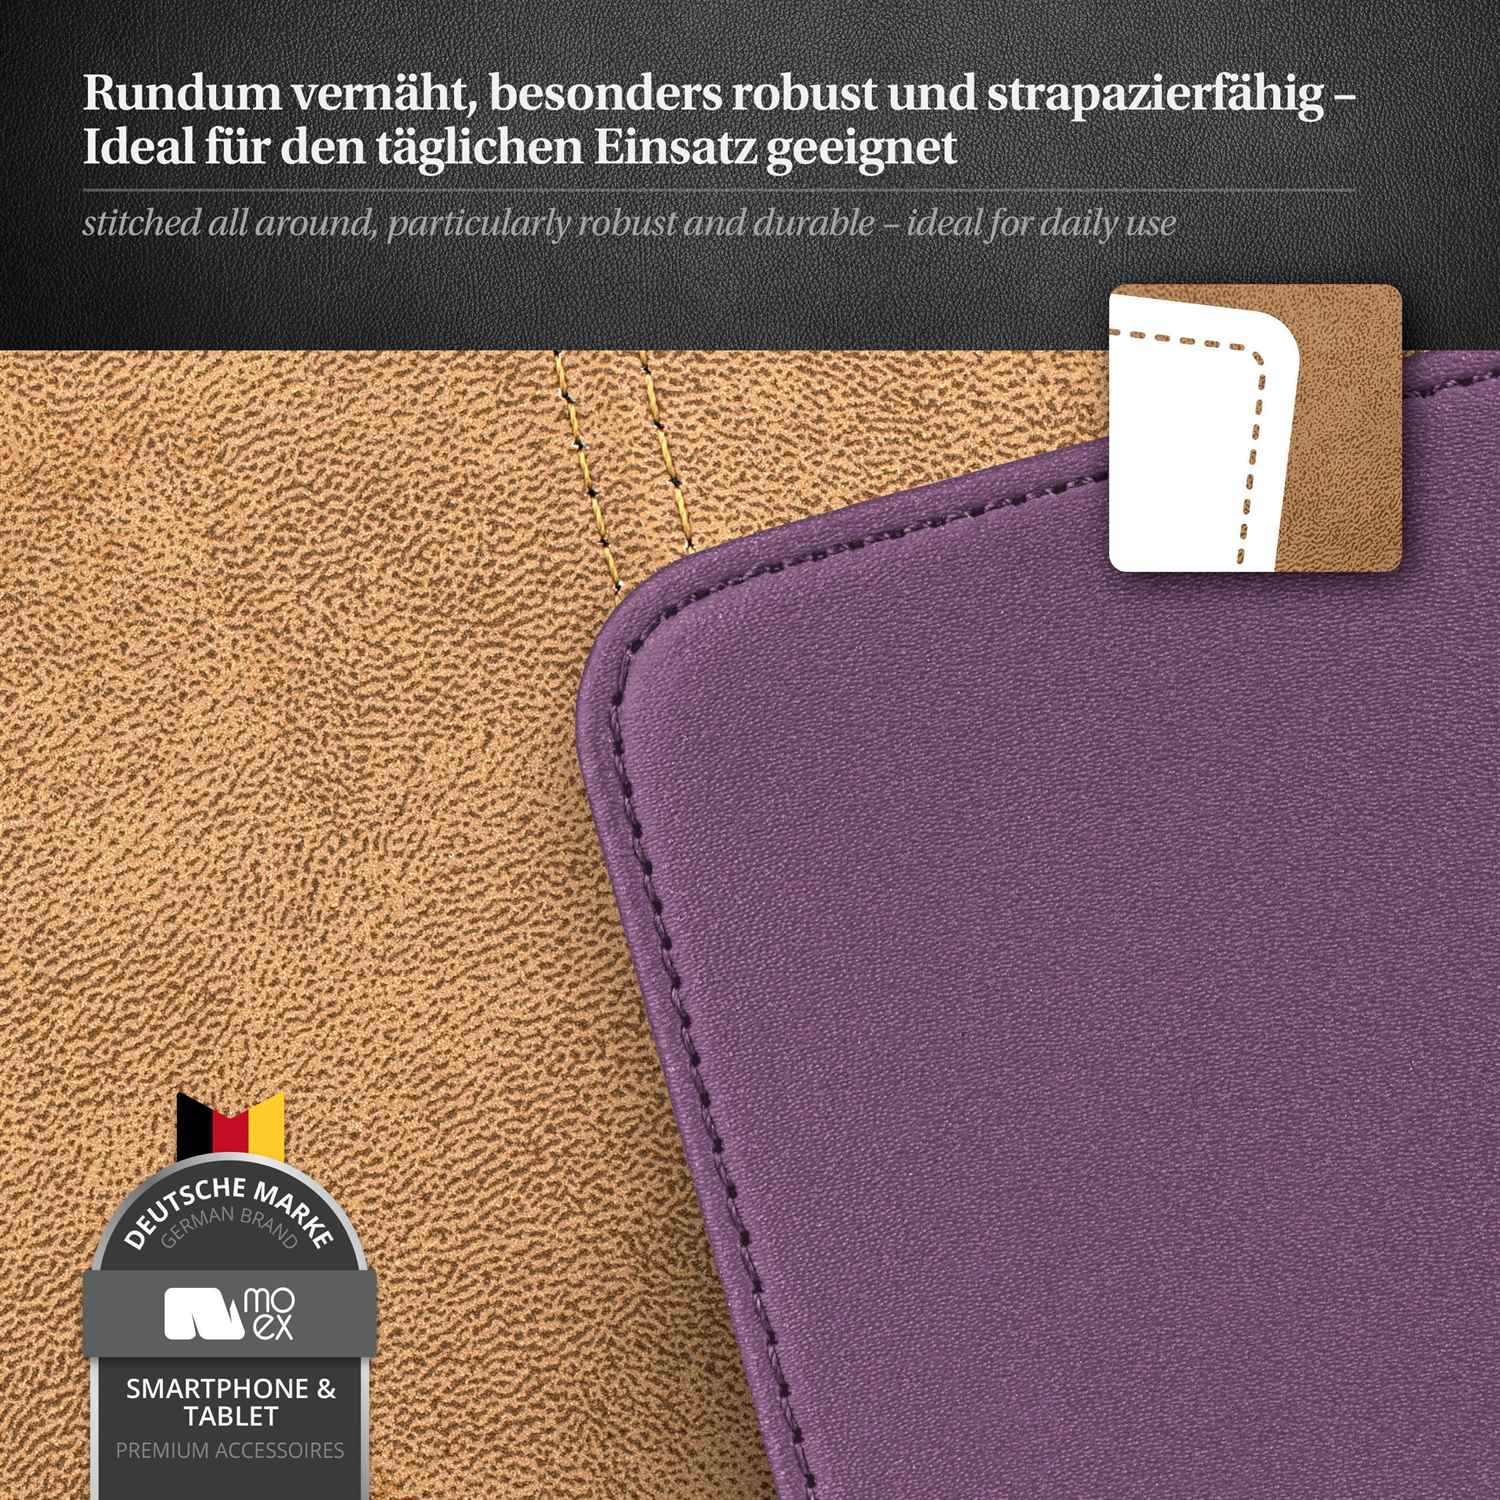 Indigo-Violet Cover, Flip Galaxy MOEX S4 Mini, Flip Case, Samsung,